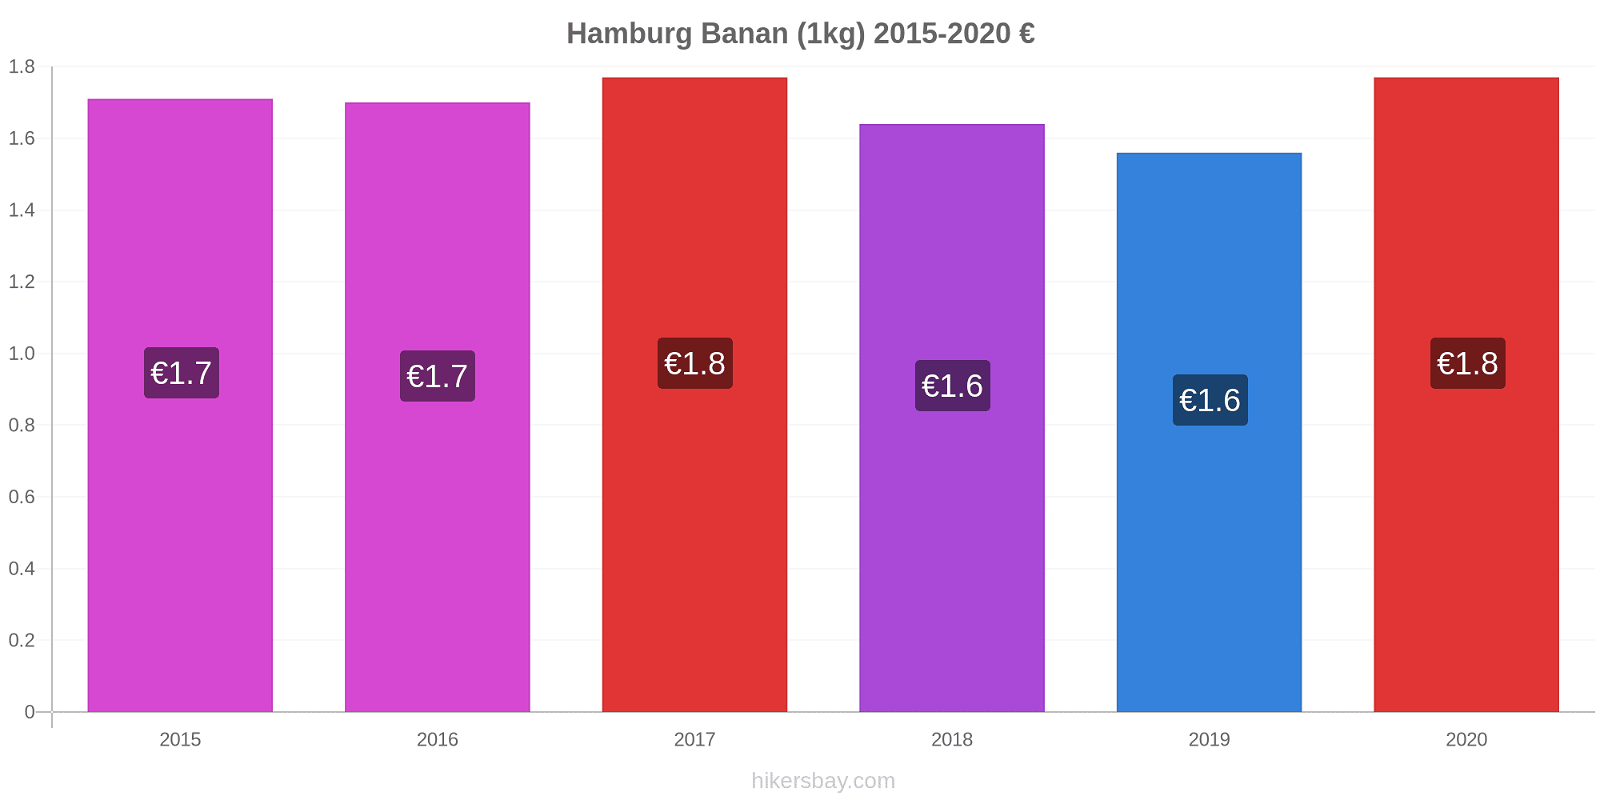 Hamburg prisendringer Banan (1kg) hikersbay.com